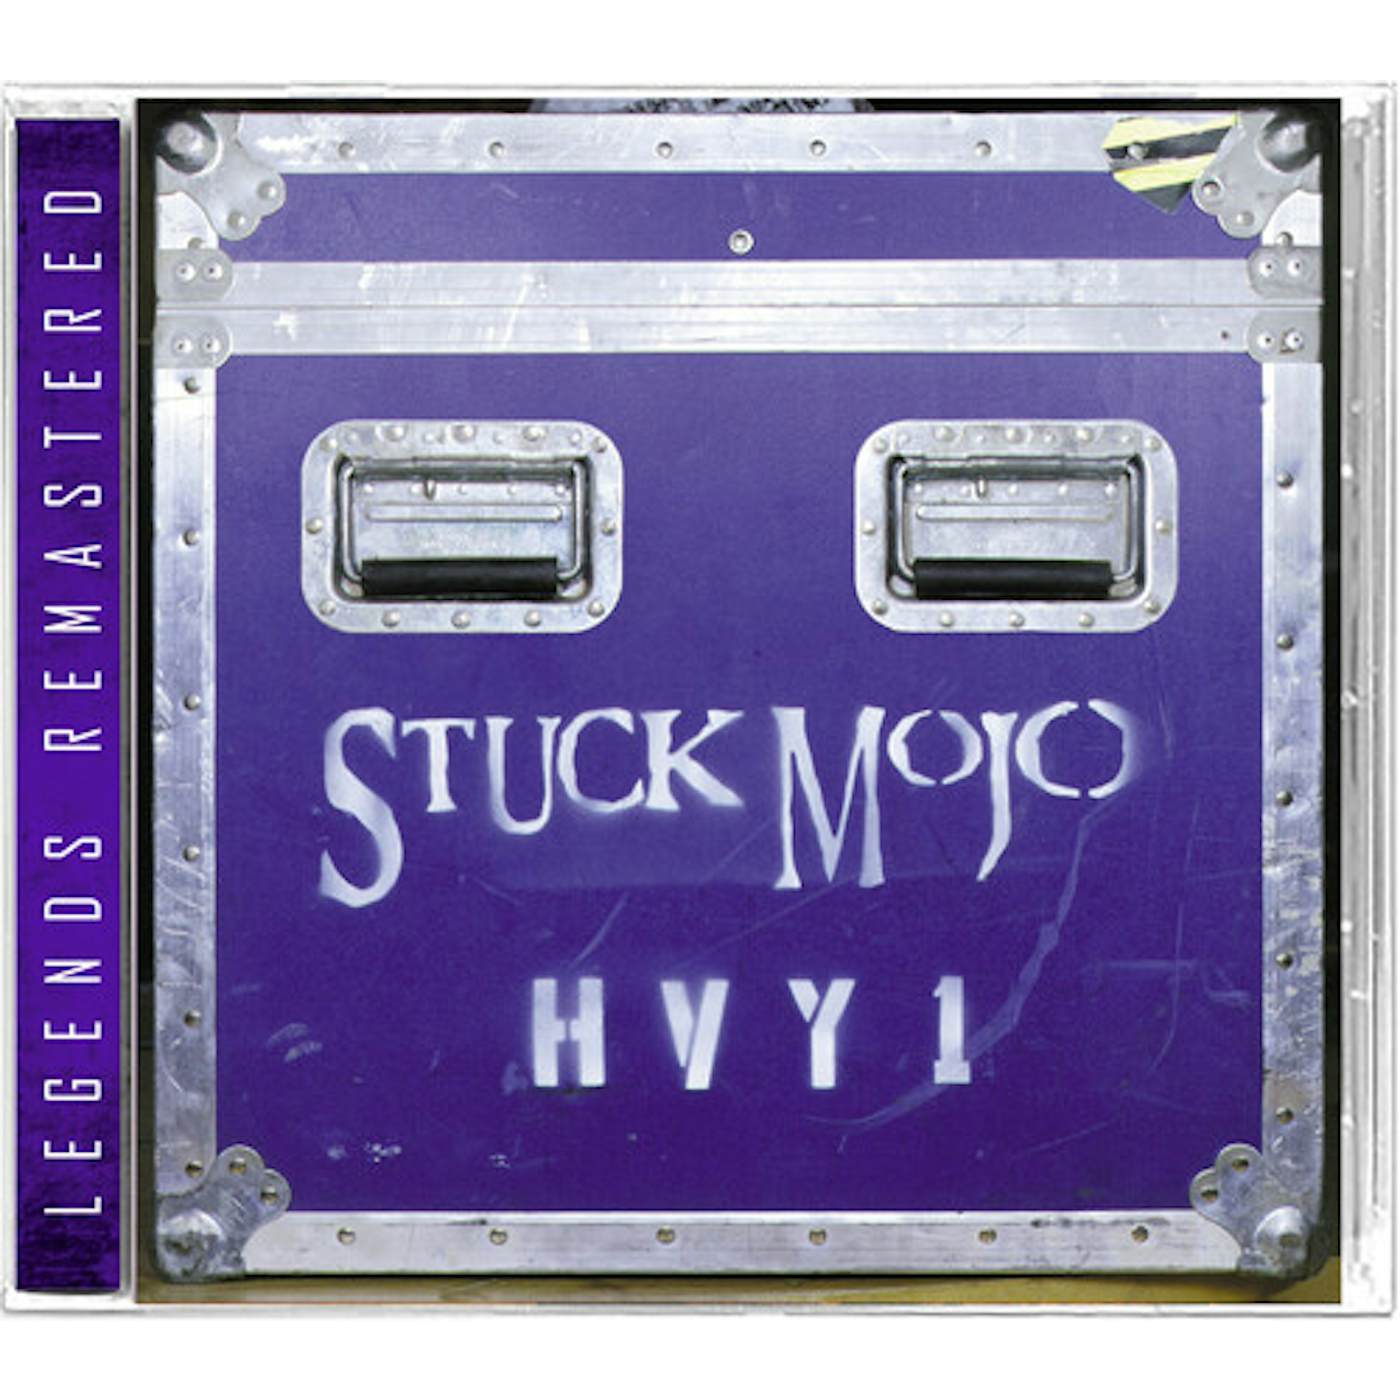 Stuck Mojo HVY1 CD